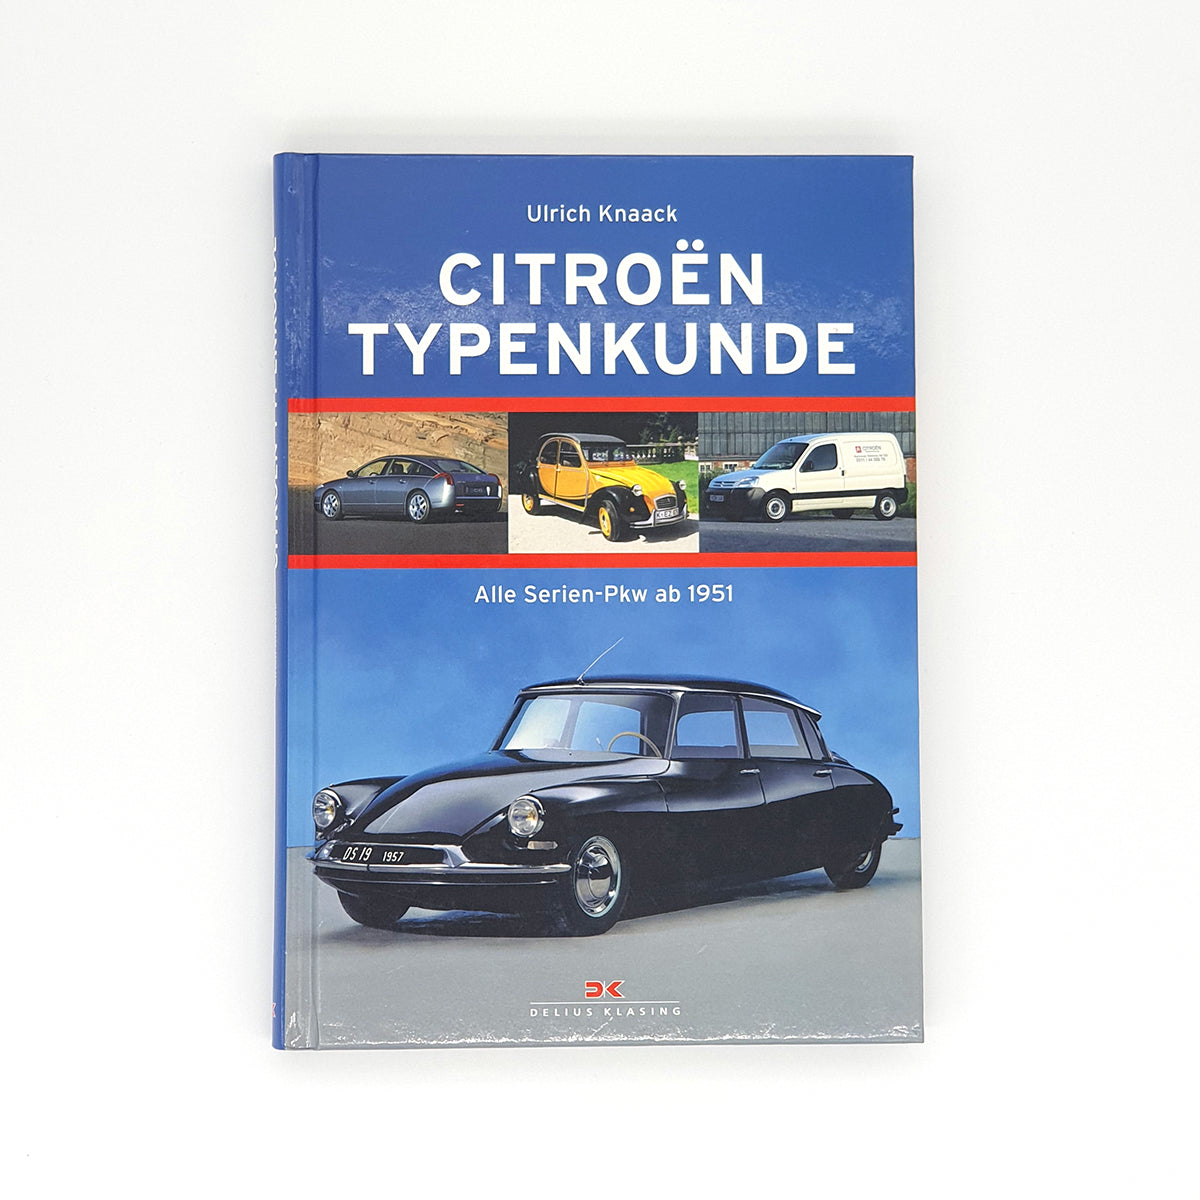 Citroën Typenkunde